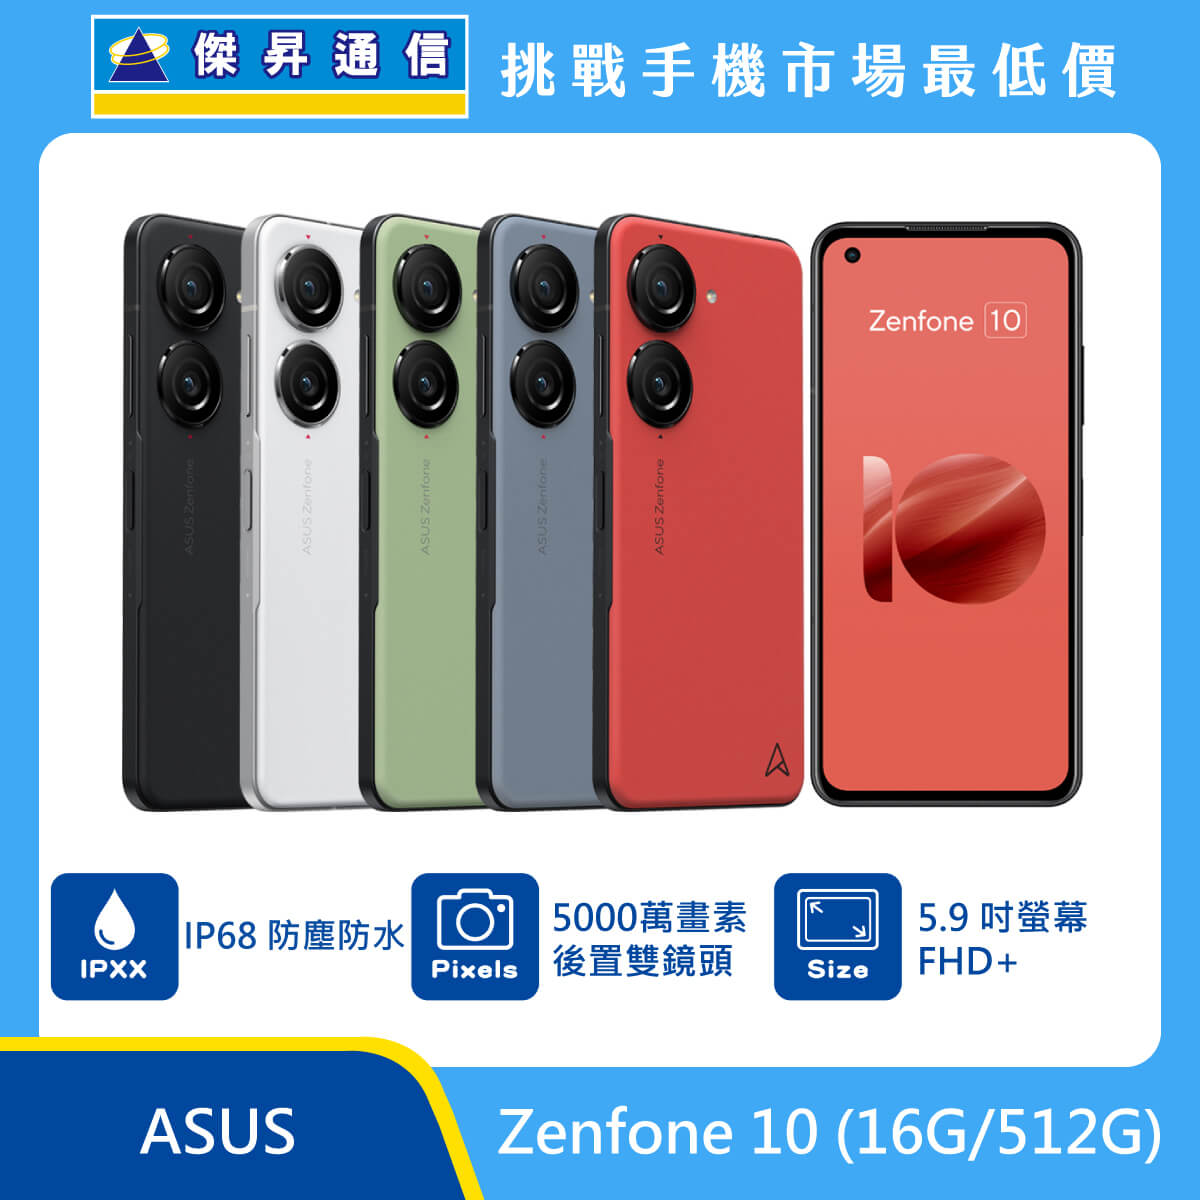 ASUS Zenfone 10 (16G/512G)最低價格